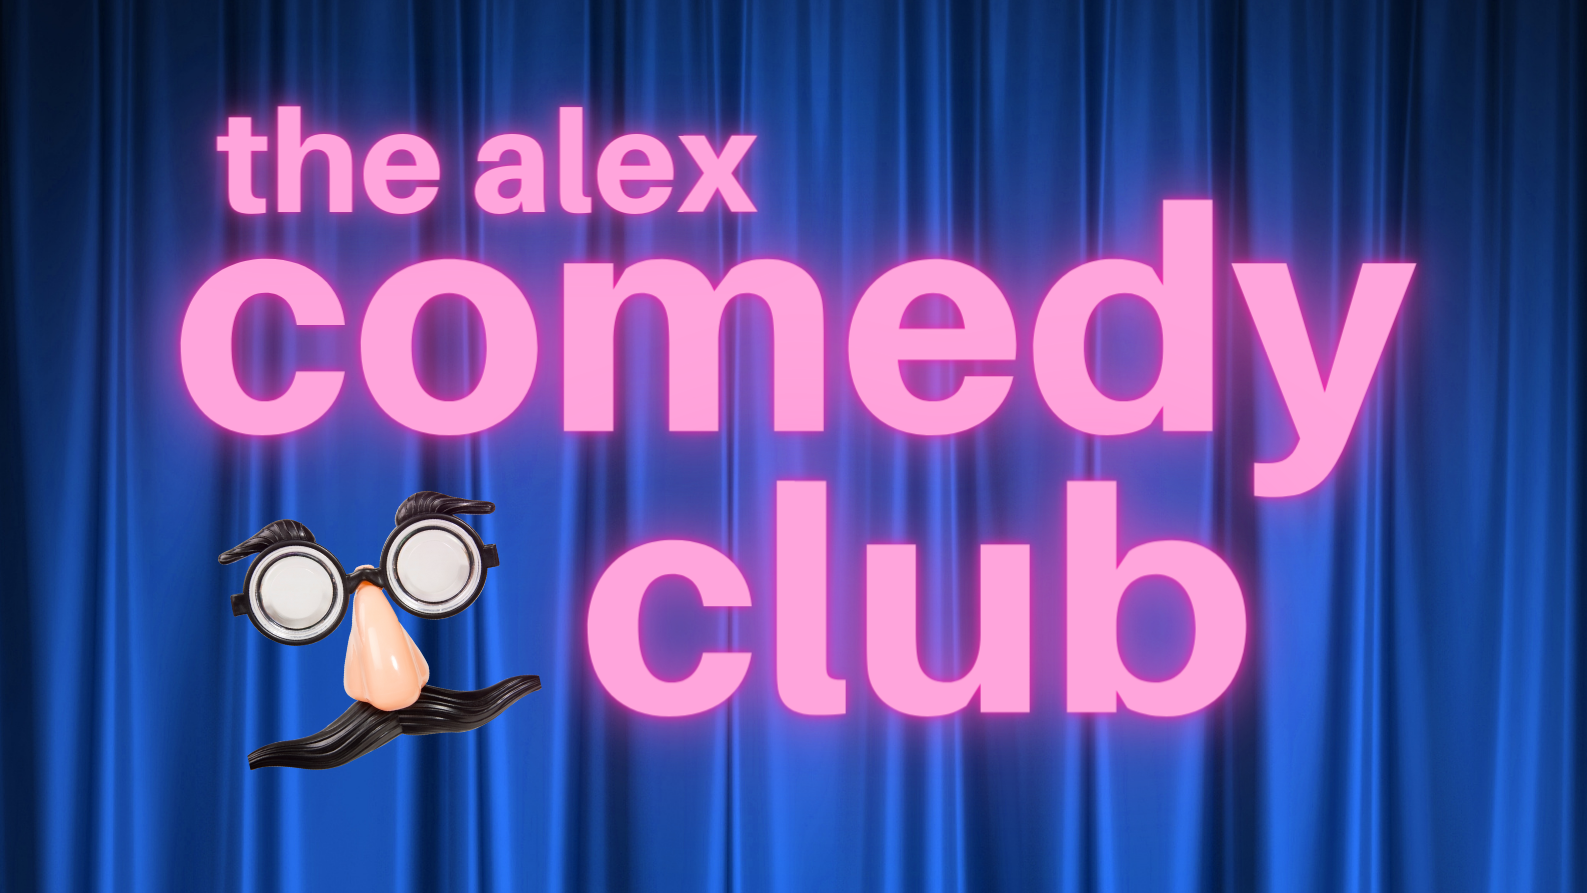 The Alex Comedy Club